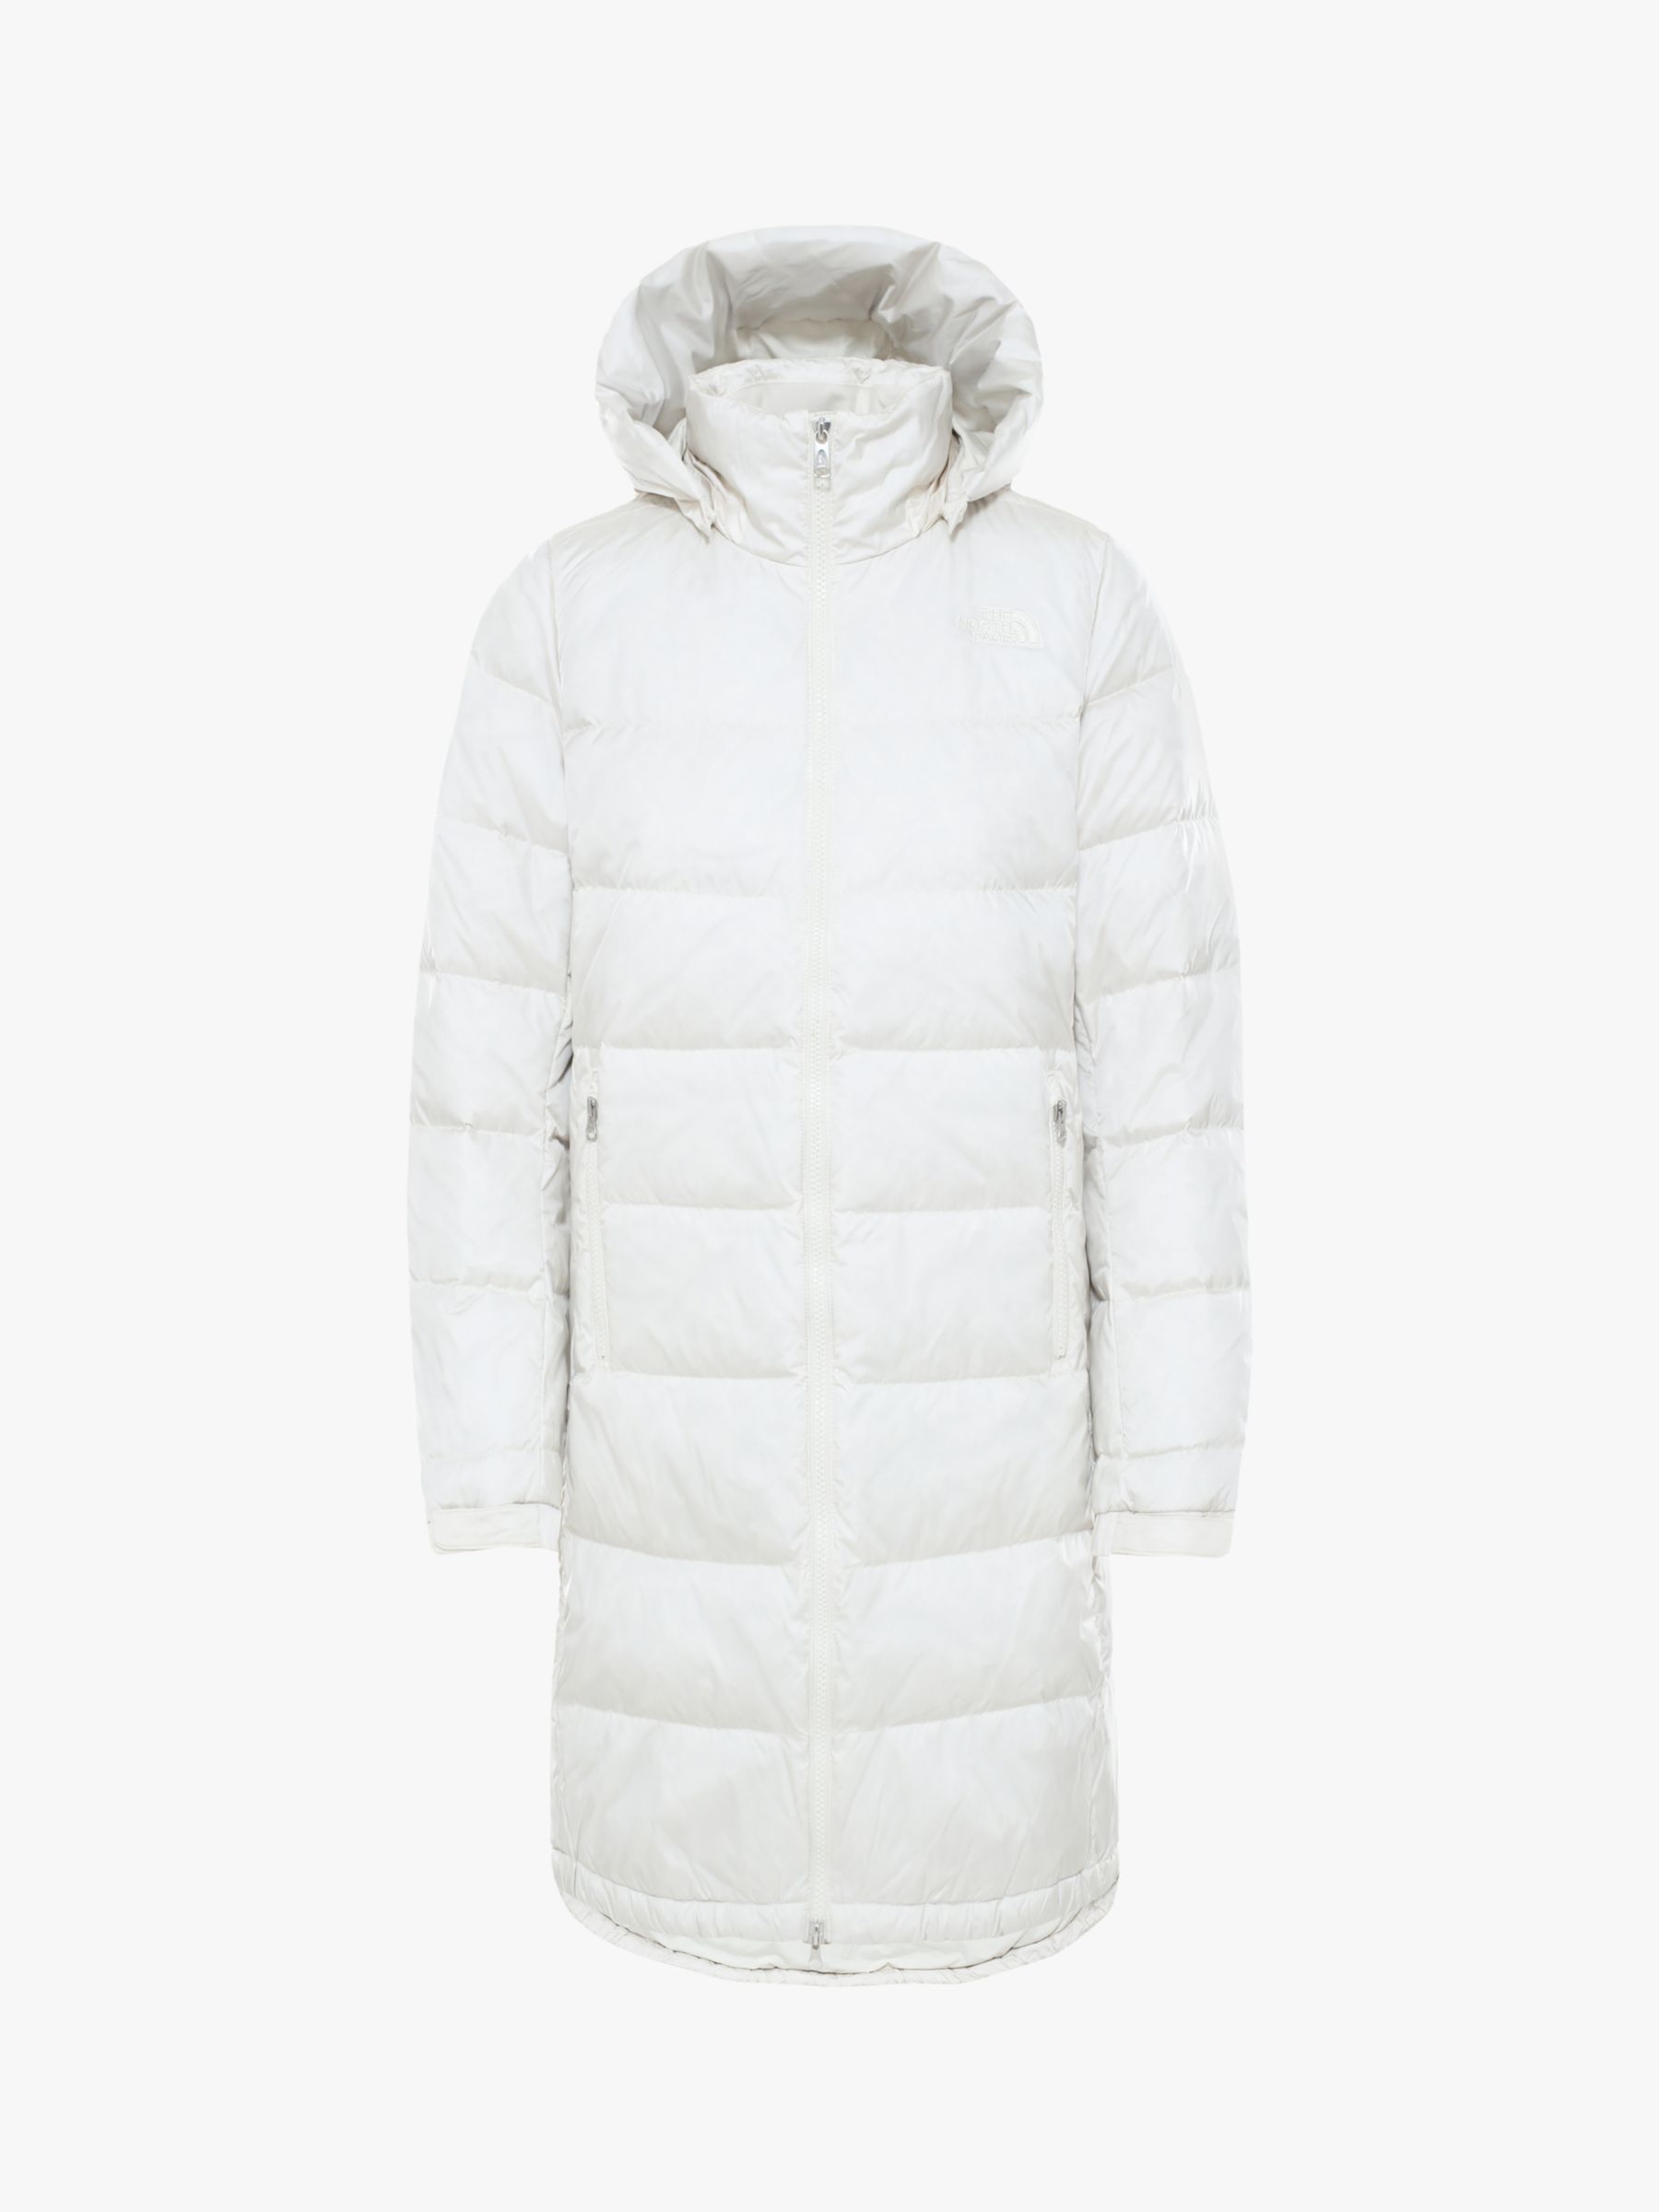 white winter coats uk